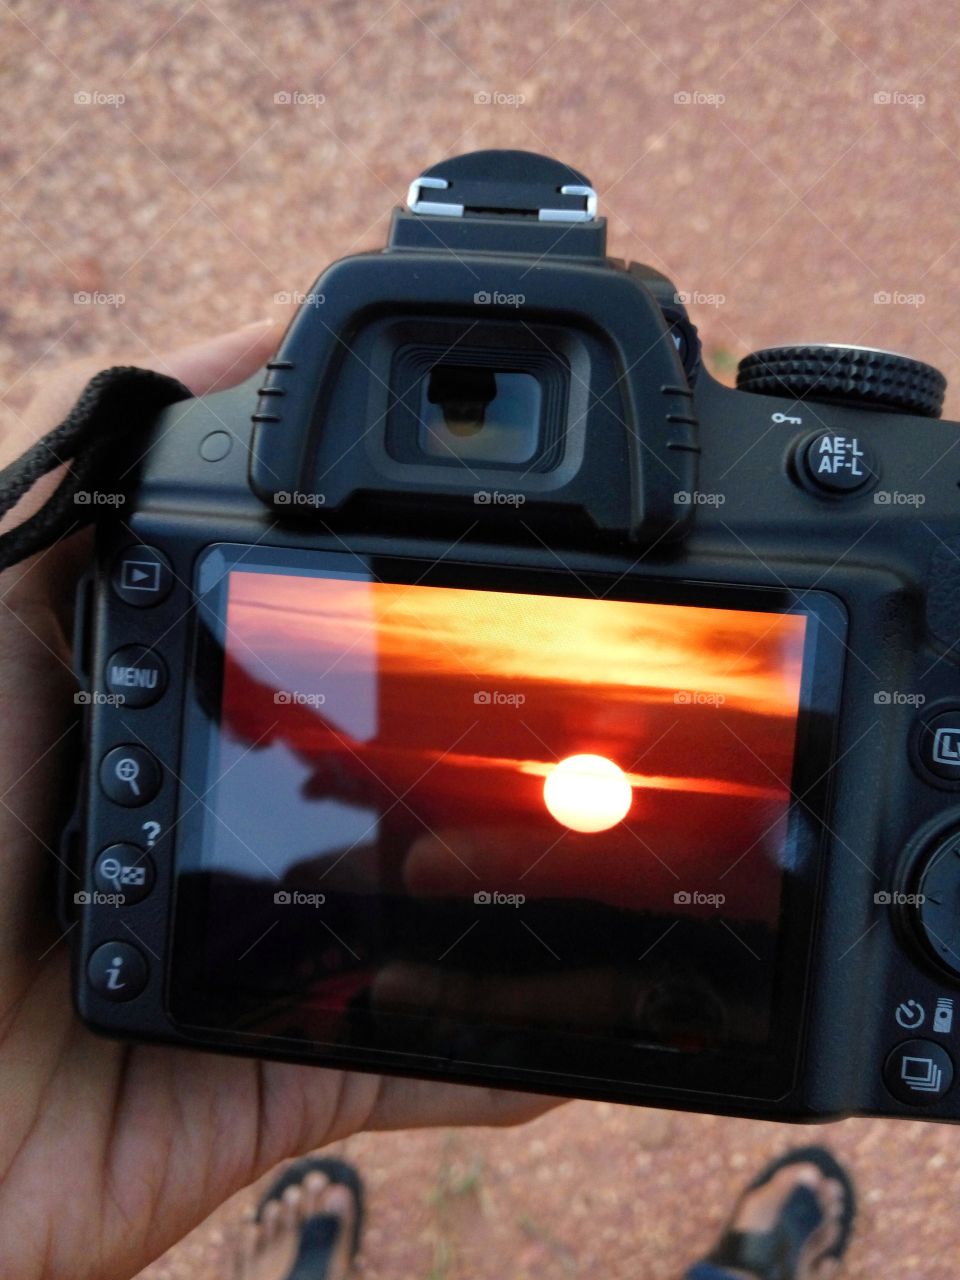 Sunset on the camera